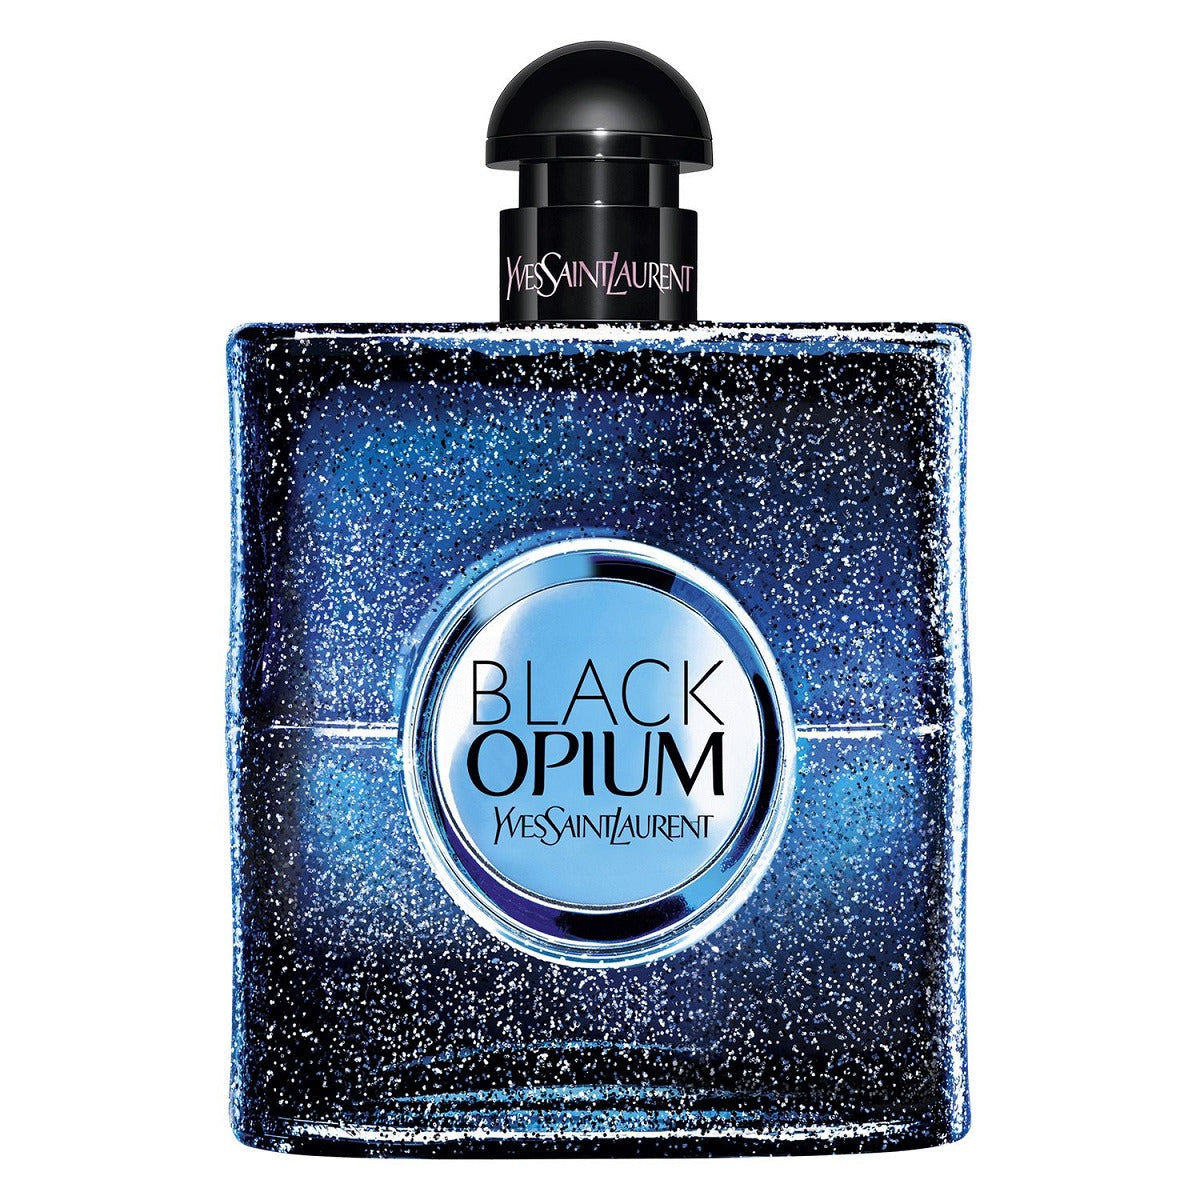 yves saint laurent black opium intense woda perfumowana null null   